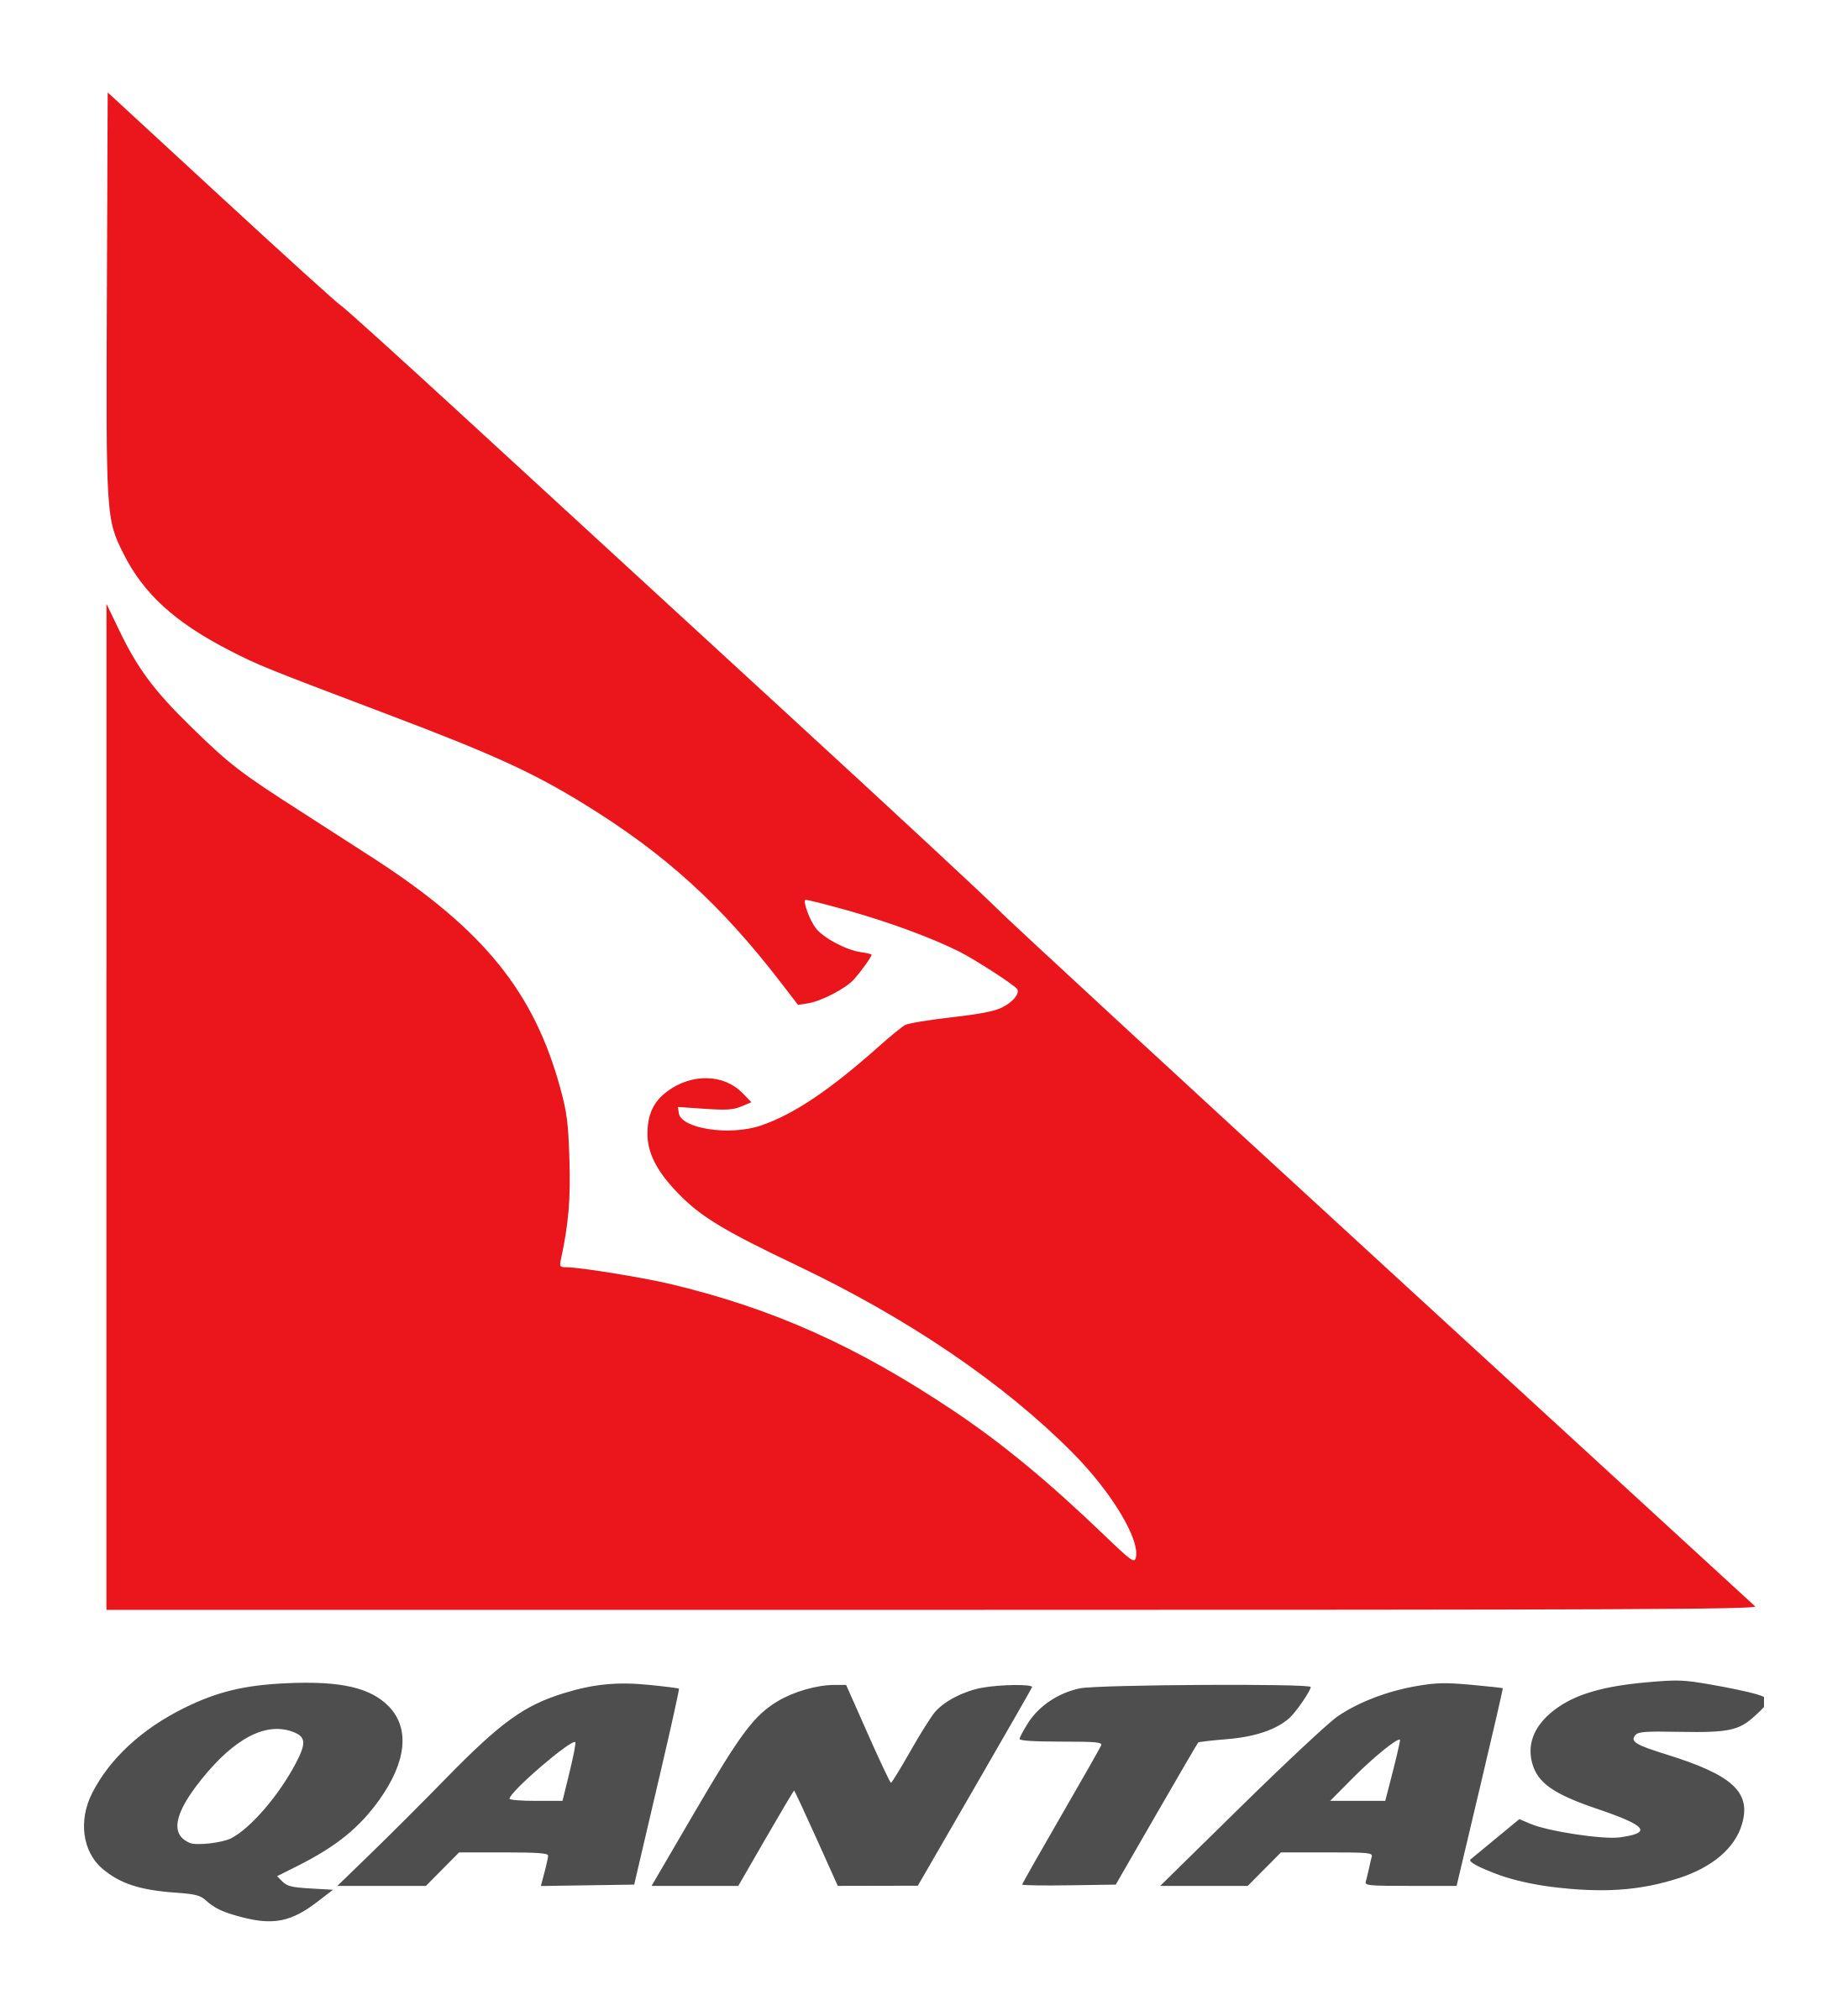 3 Red Triangles Logo - Qantas Logo, Qantas Symbol, Meaning, History and Evolution